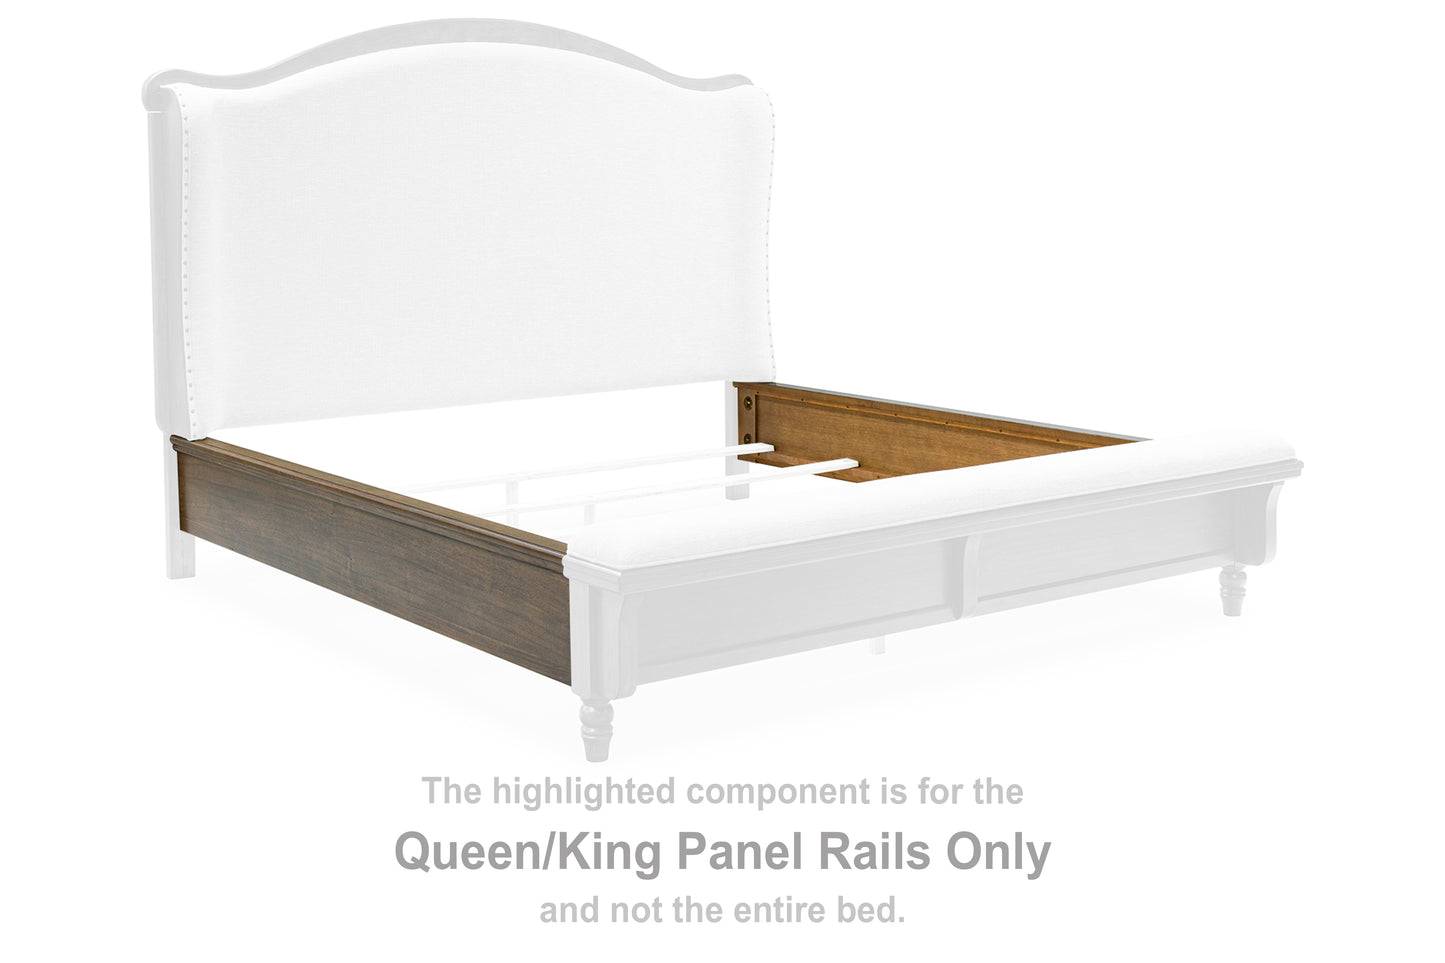 Sturlayne Queen/King Panel Rails